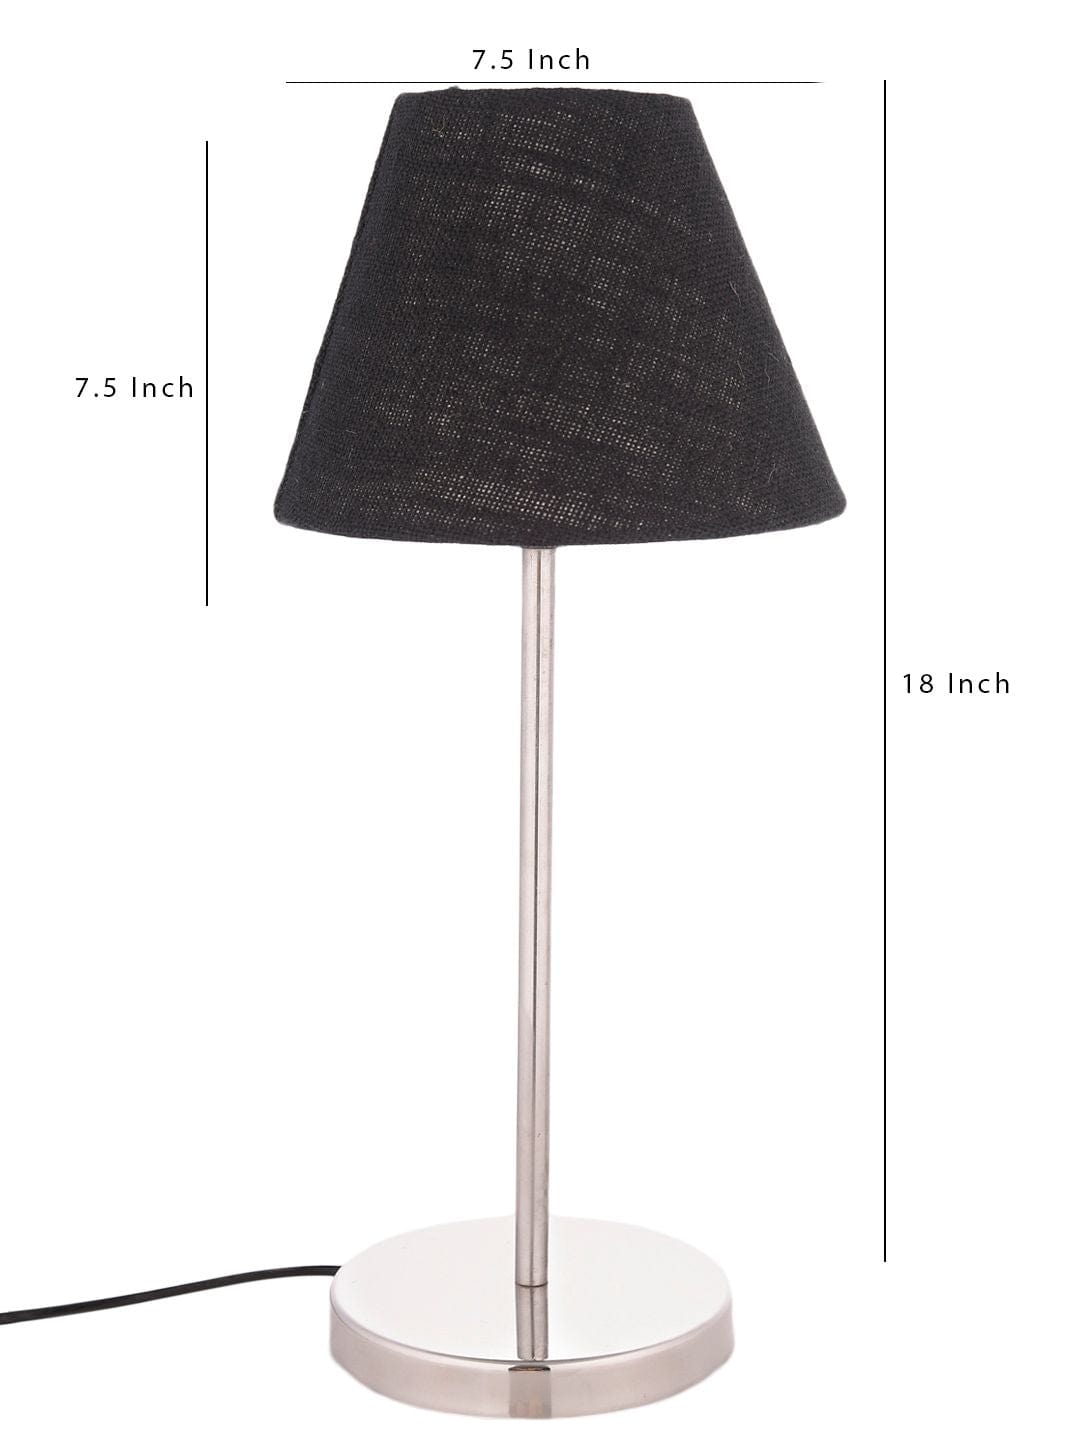 Metal Table Lamp with Black Jute Shade